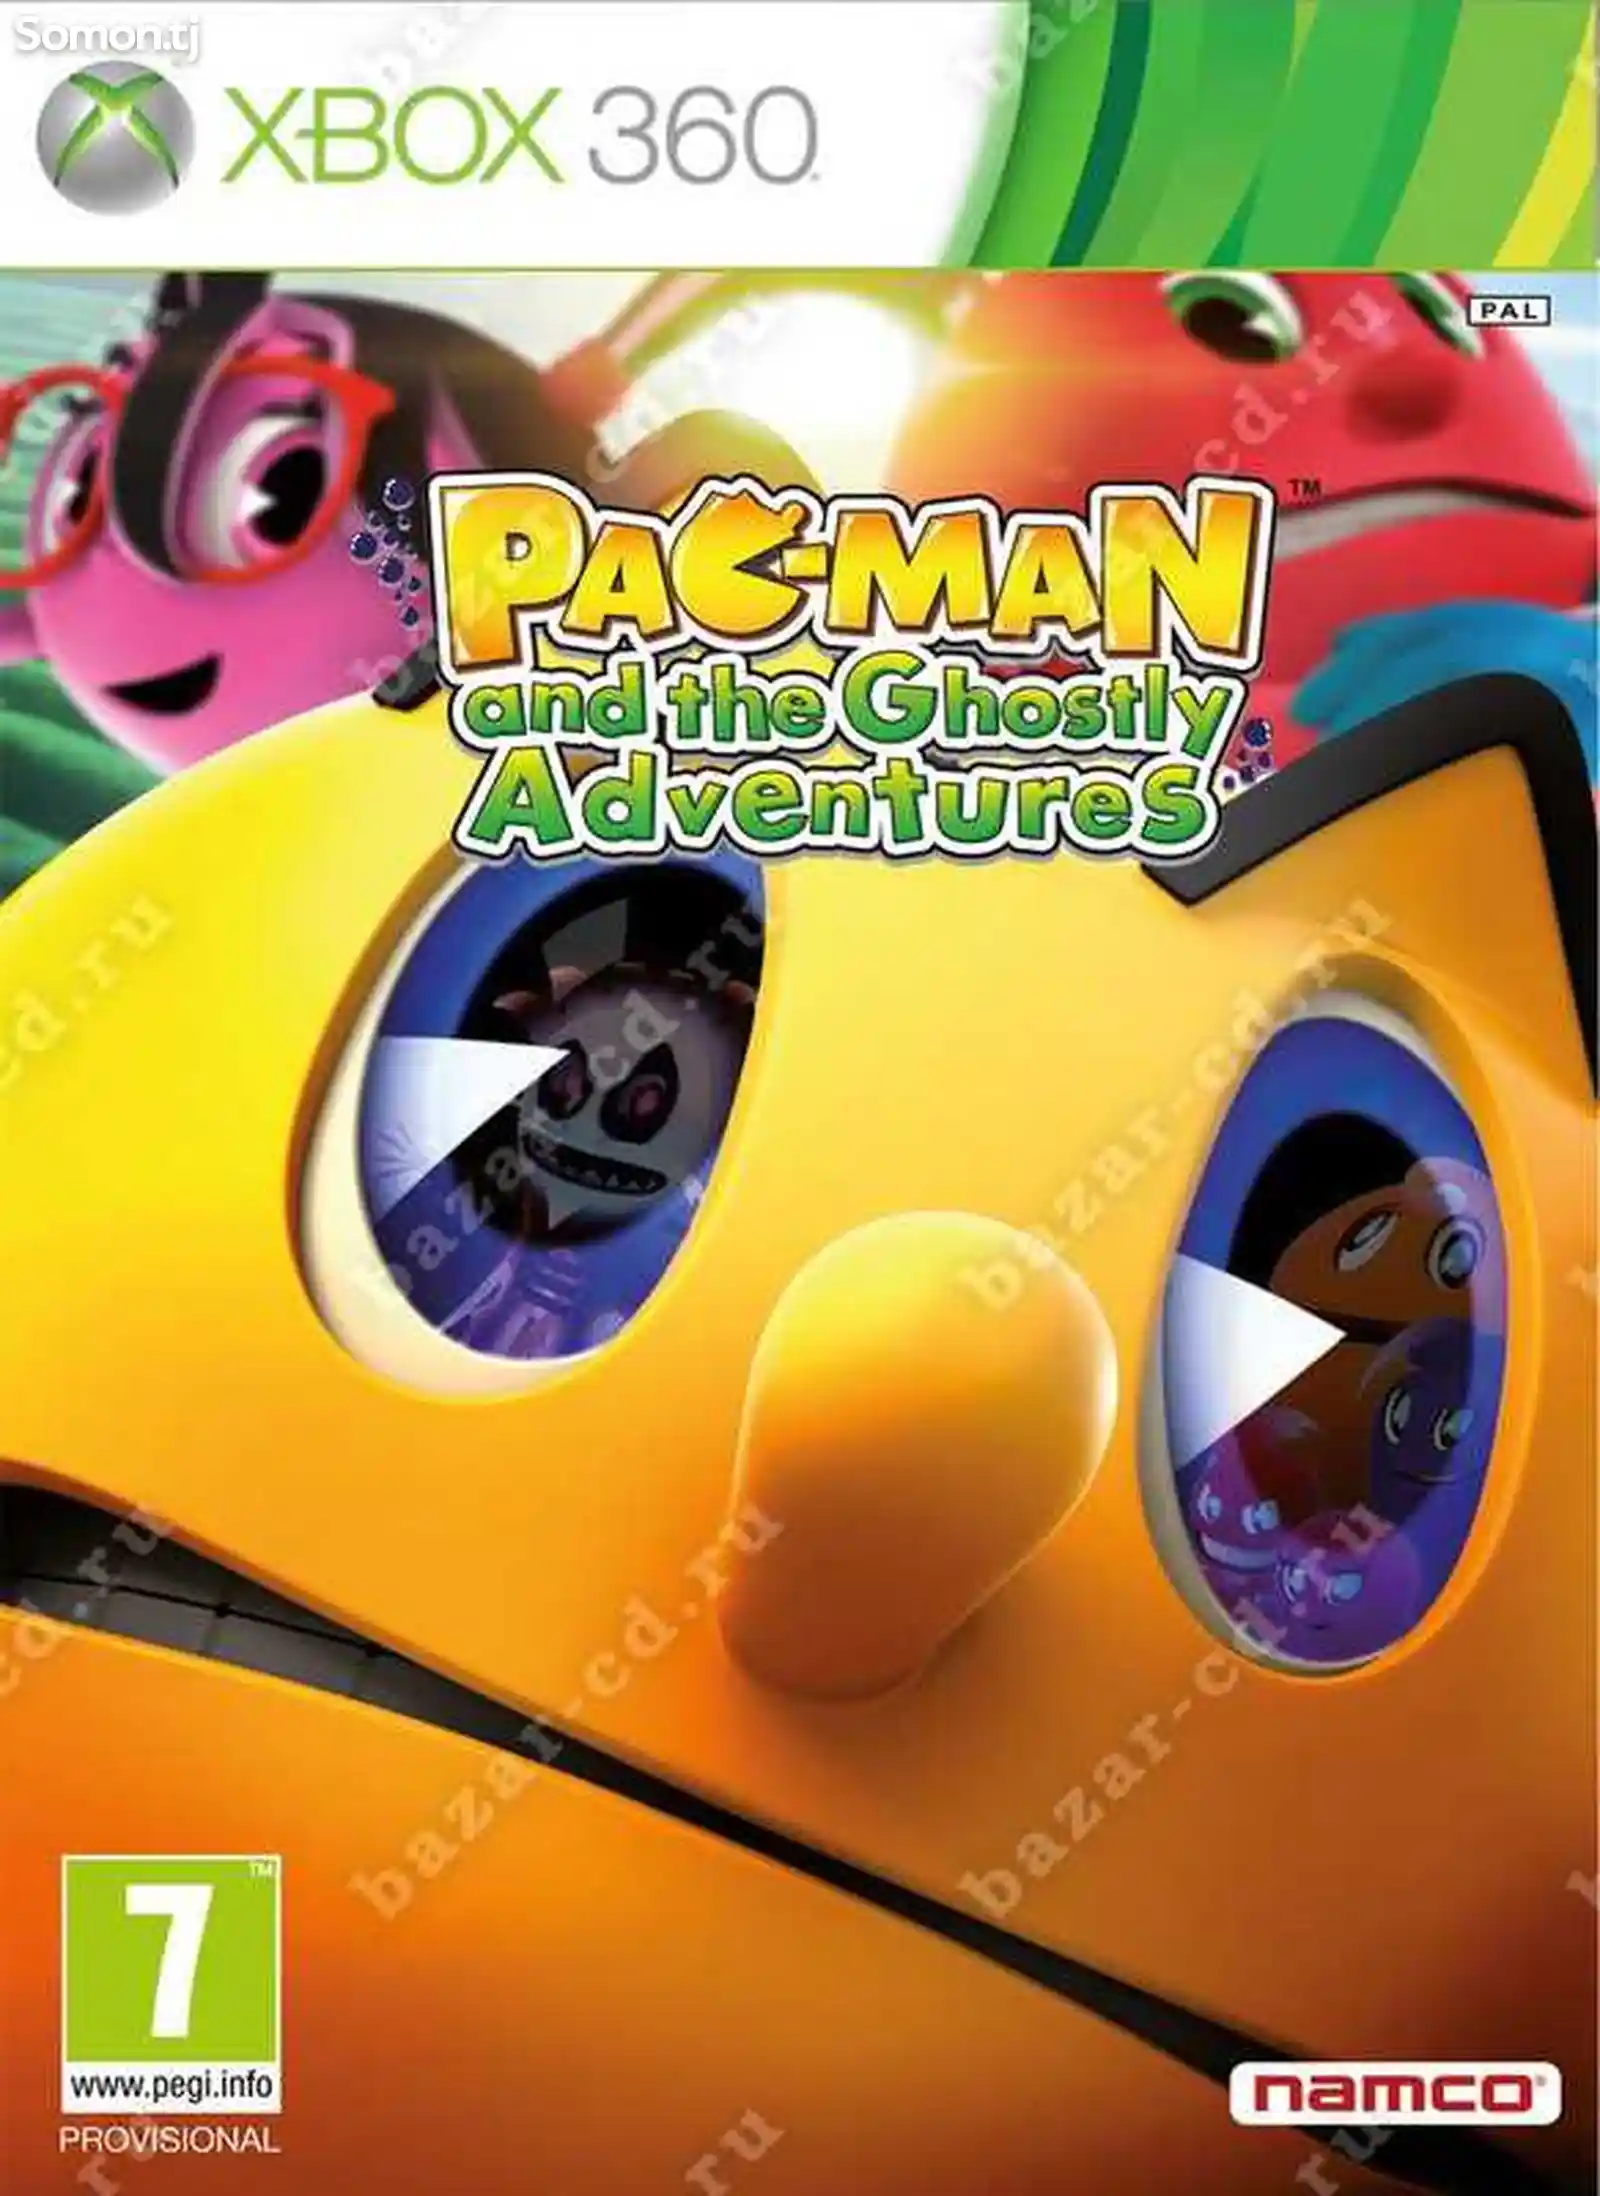 Игра Pac man and the ghostly adventures 2 для прошитых Xbox 360